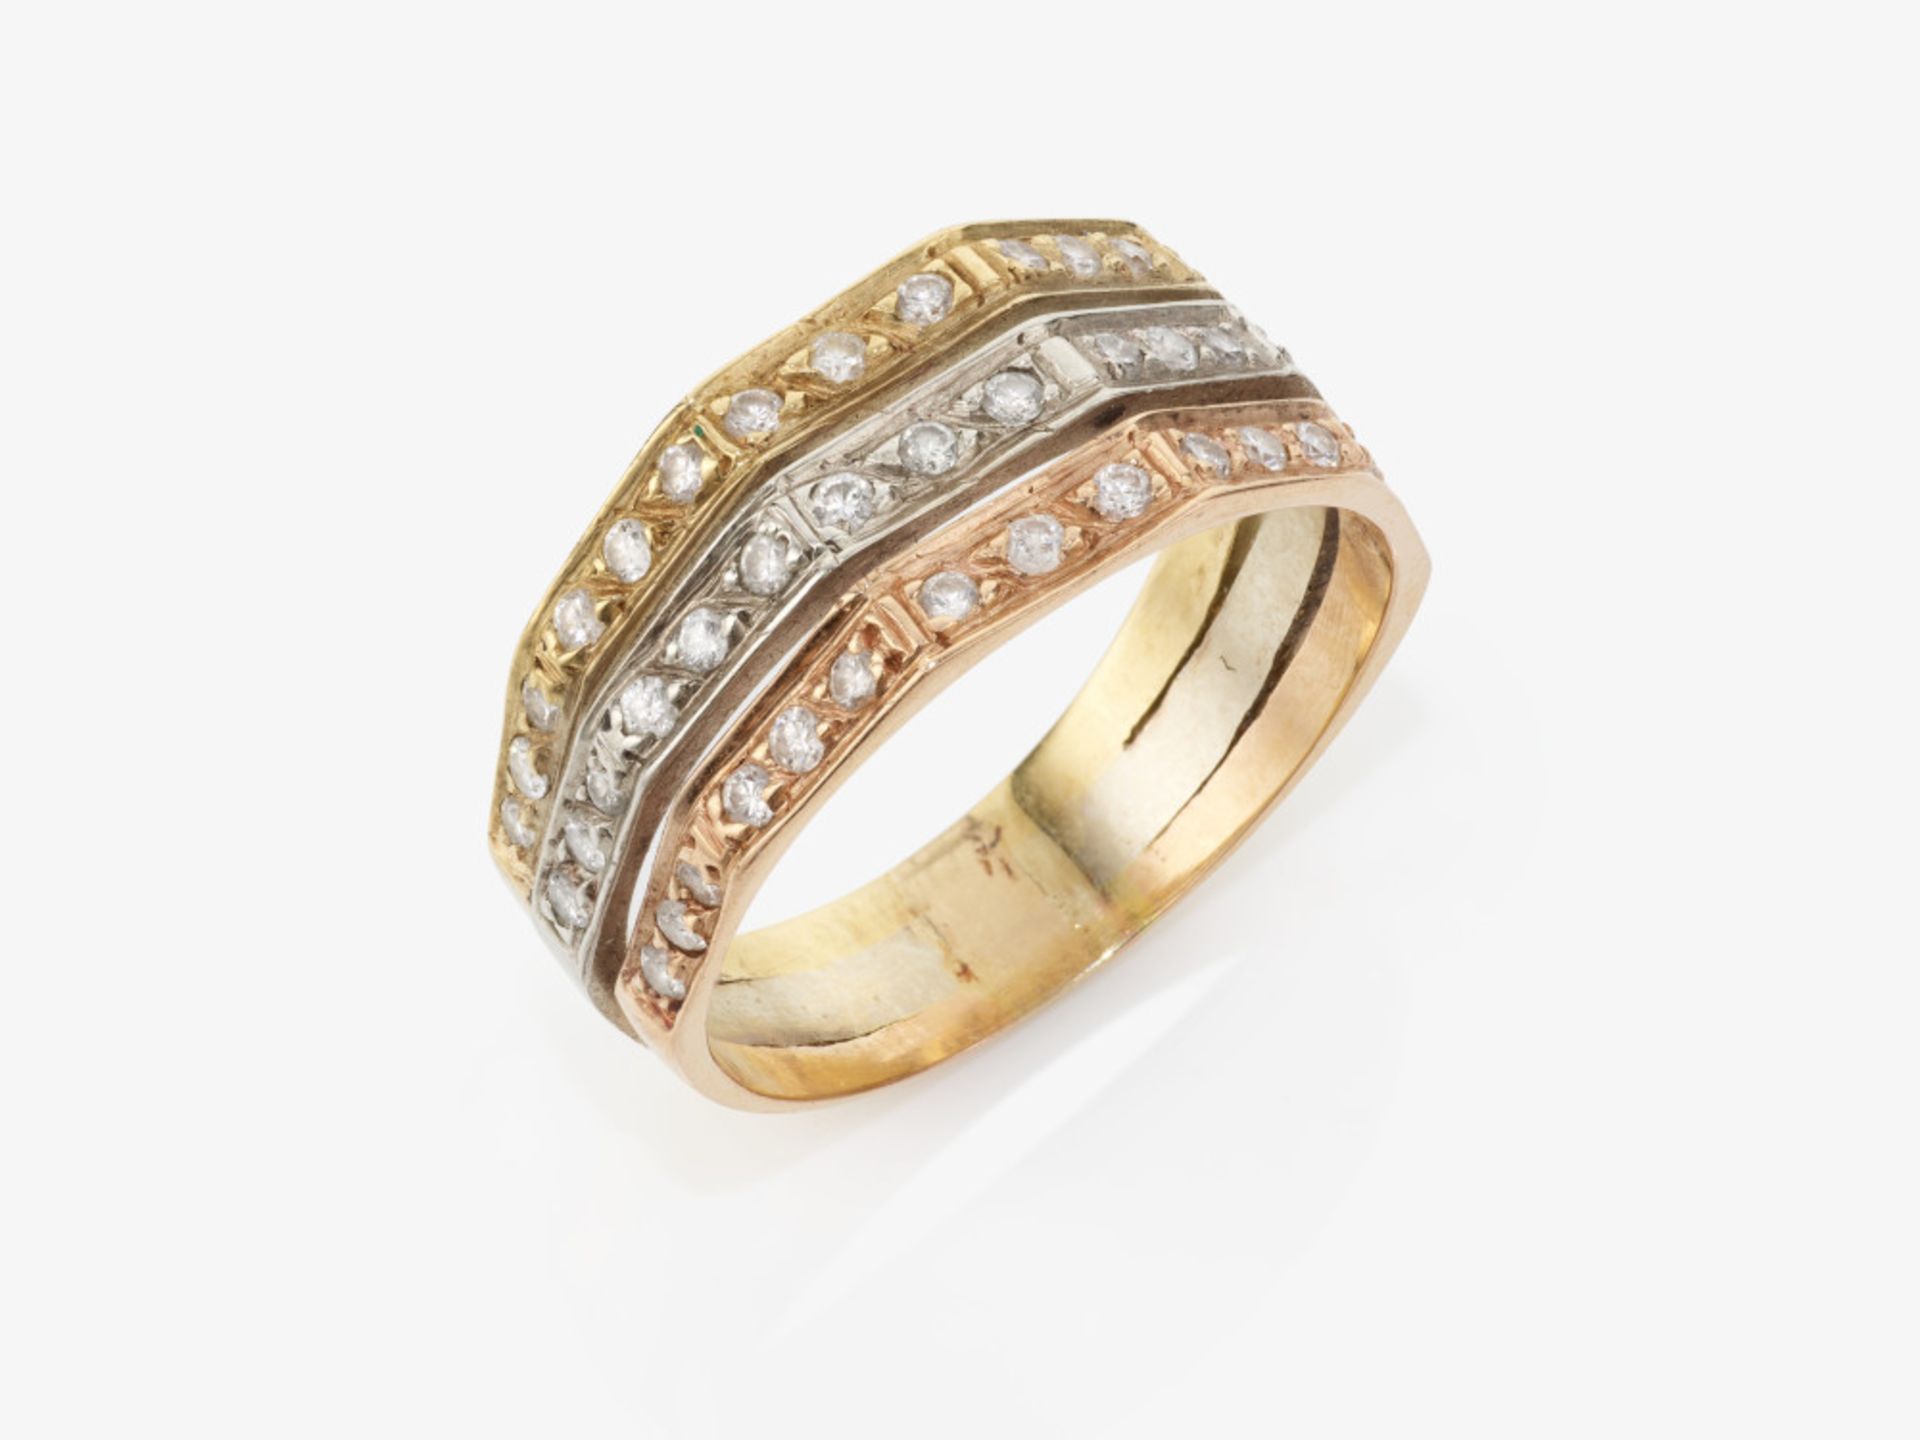 A three-piece ring with brilliant-cut diamonds